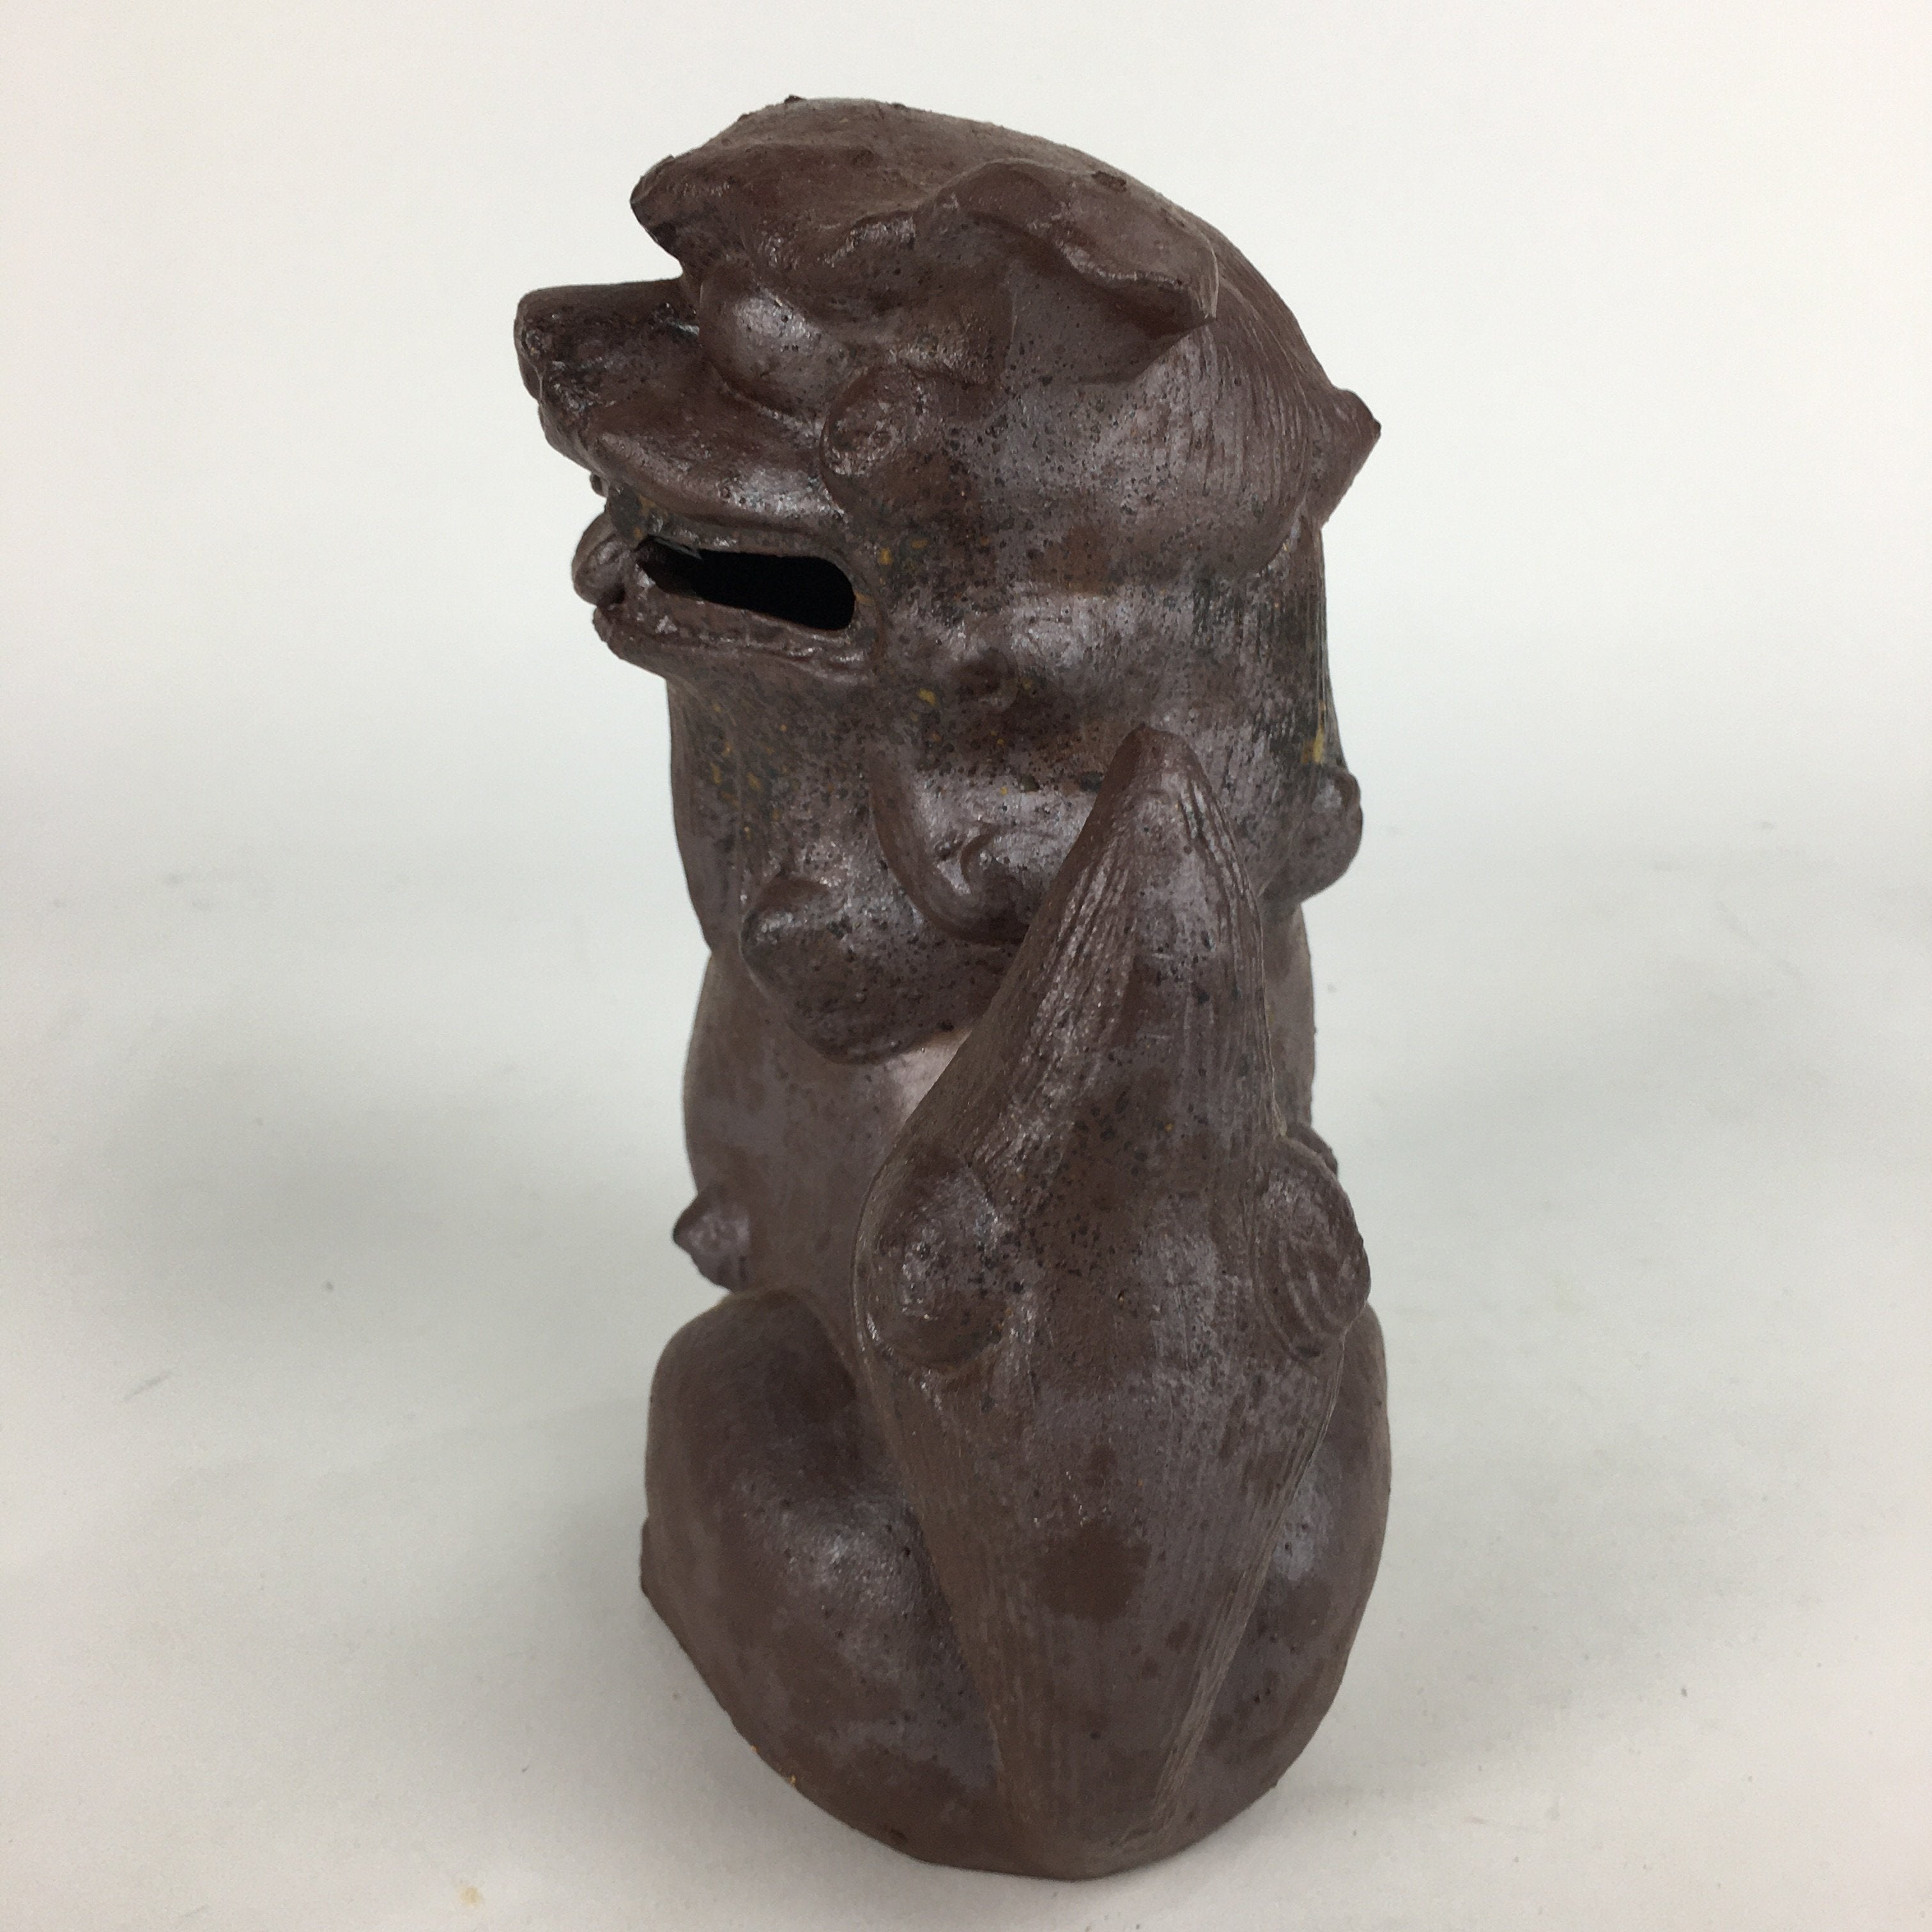 Japanese Okinawa Ceramic Shishi Lion Statue Brown Foo Dog Komainu BD643